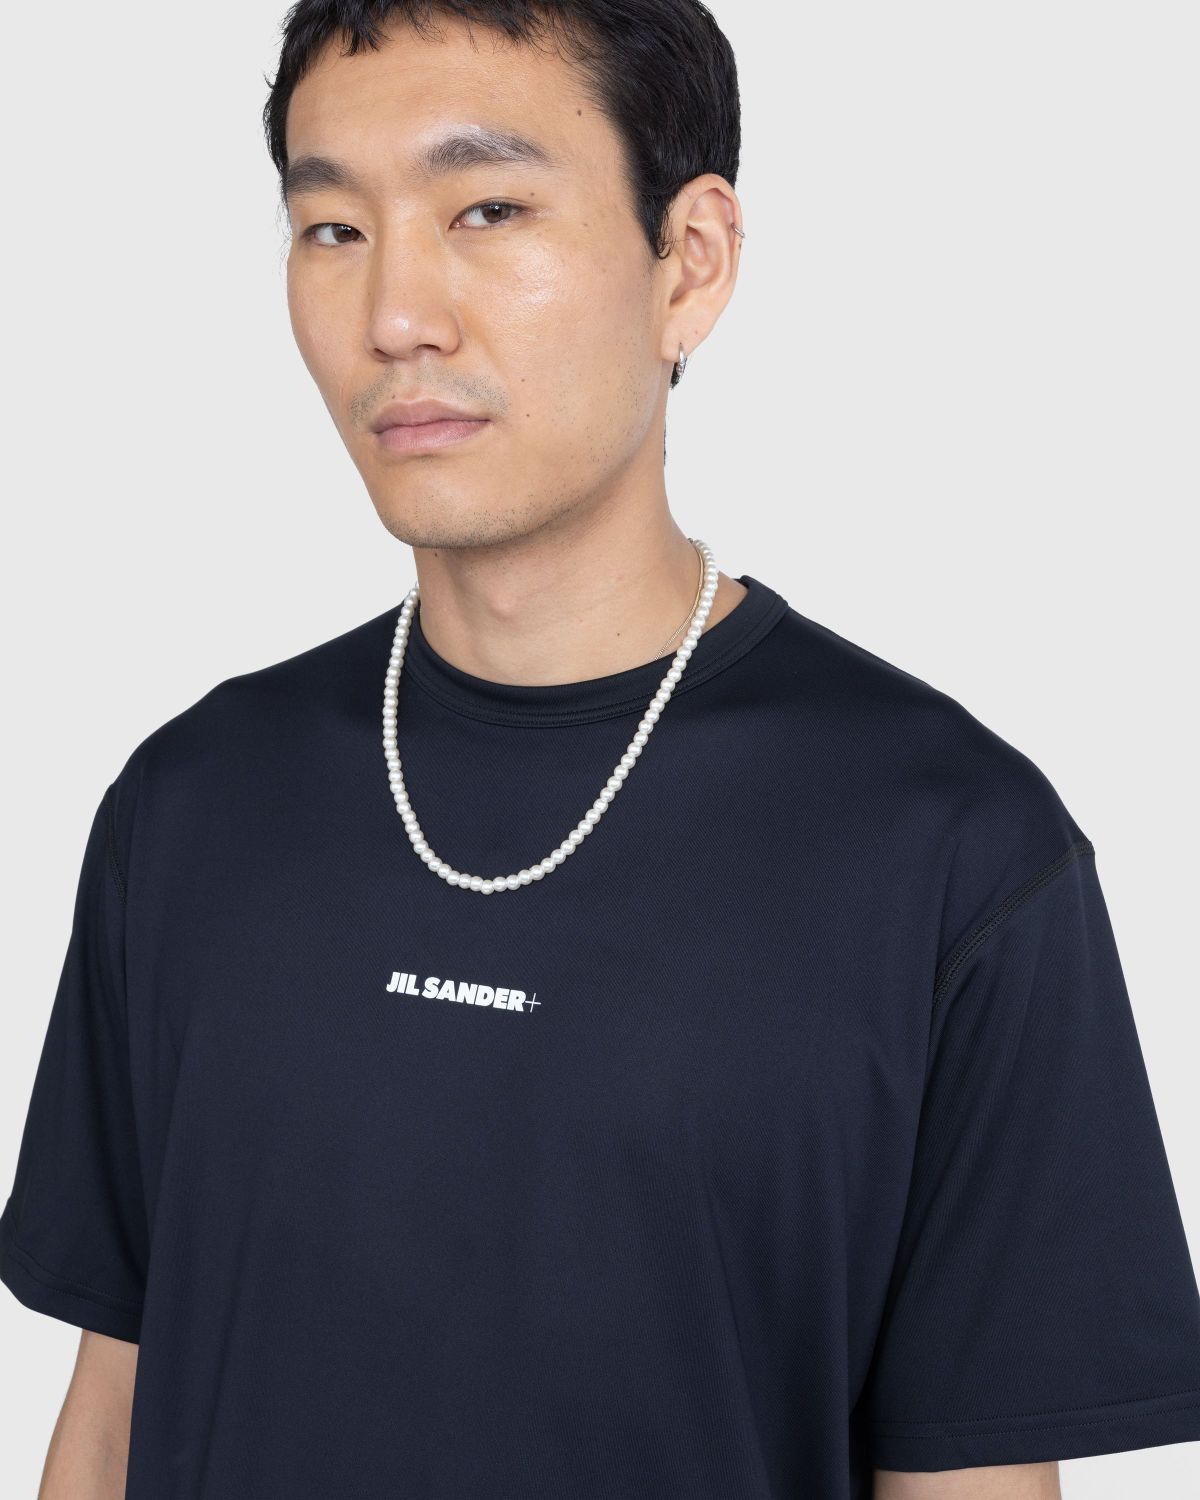 Jil Sander – Logo T-Shirt Black - T-shirts - Black - Image 2